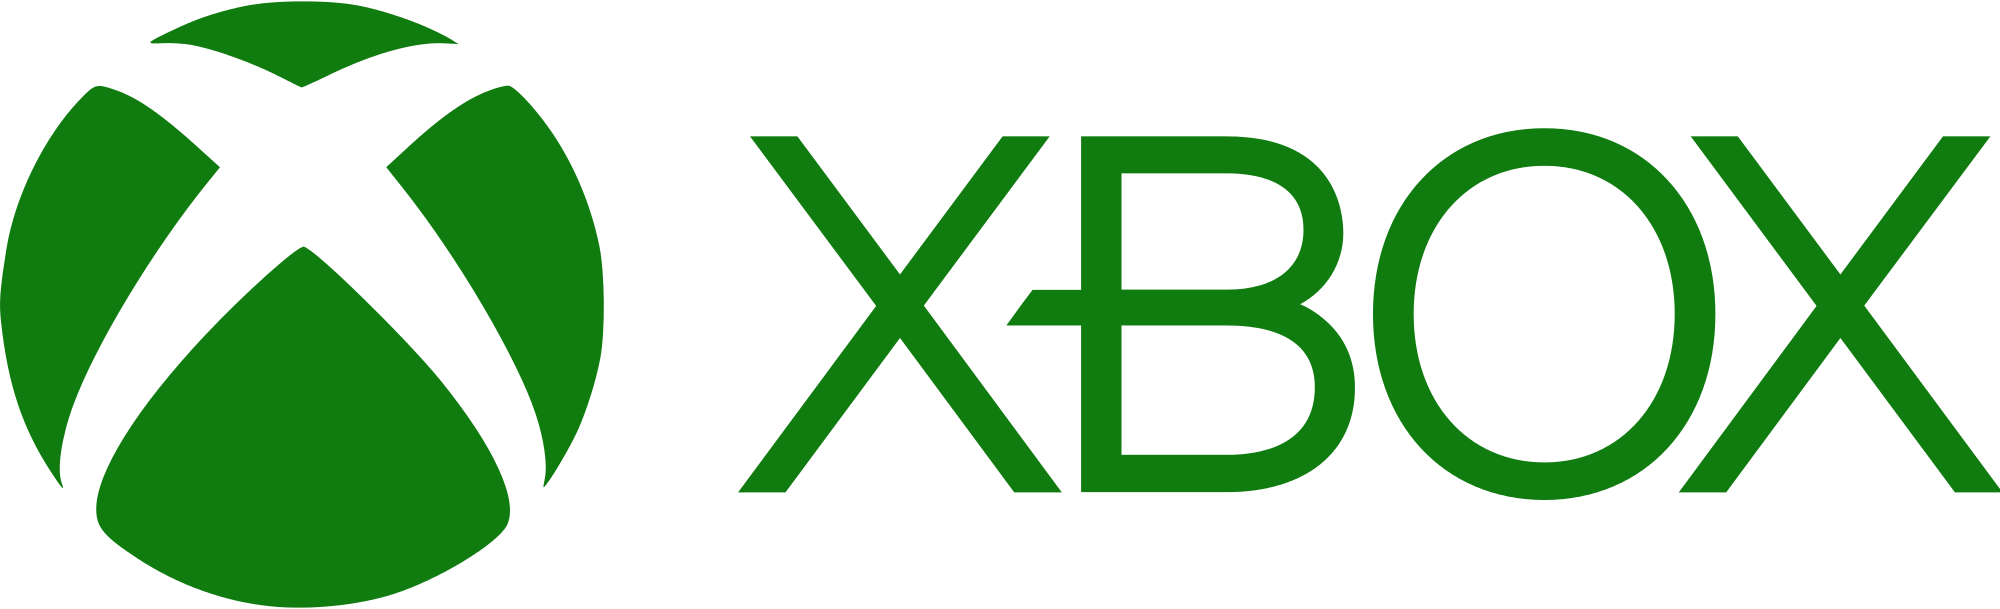 Xobox Logo - XBOX logo 2012.svg